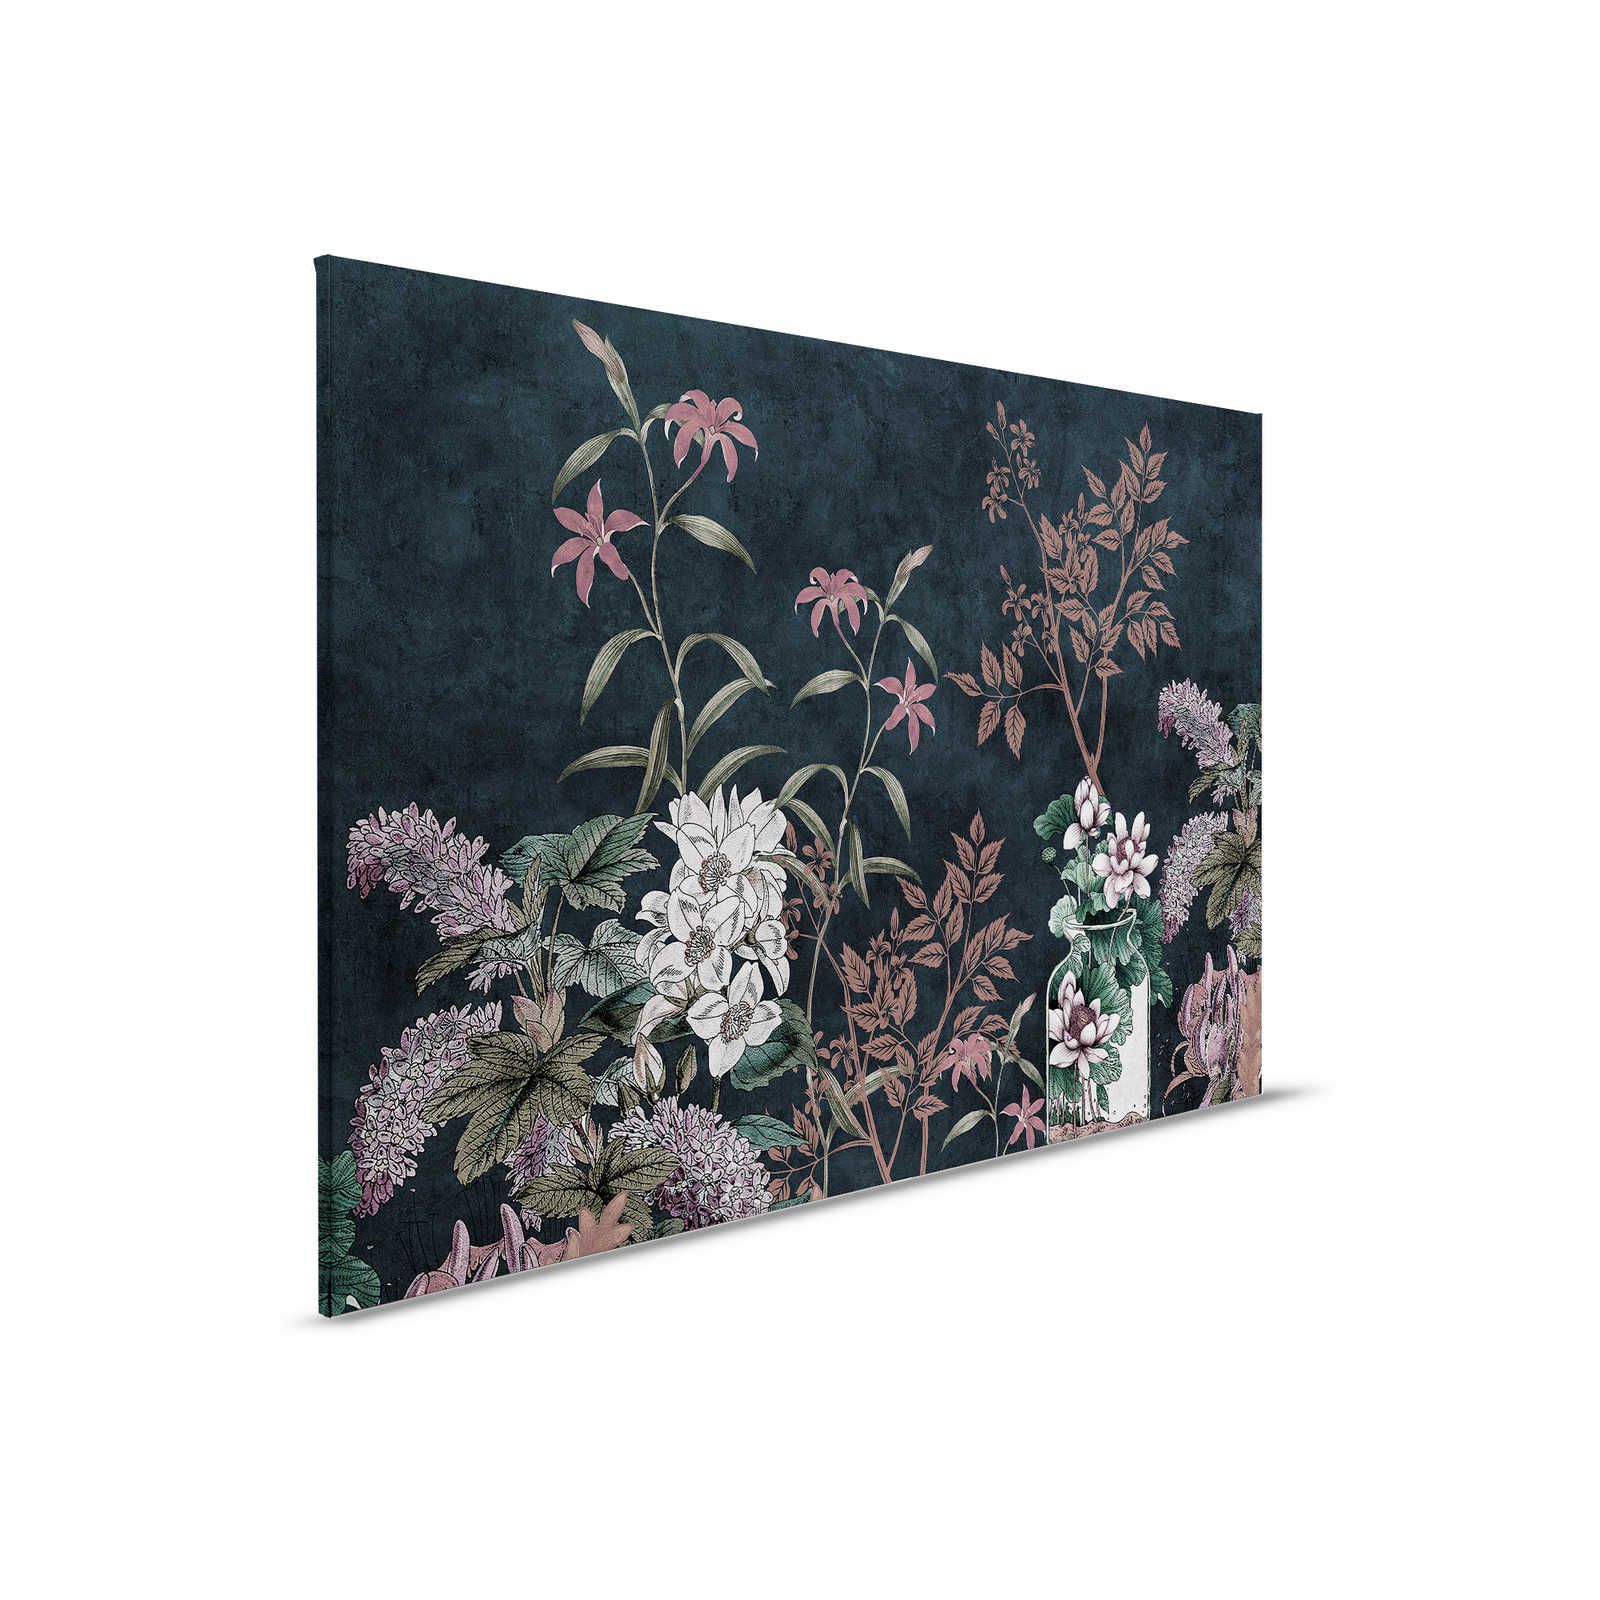 Dark Room 2 - Zwart Canvas Schilderij Botanisch Patroon Roze - 0.90 m x 0.60 m
